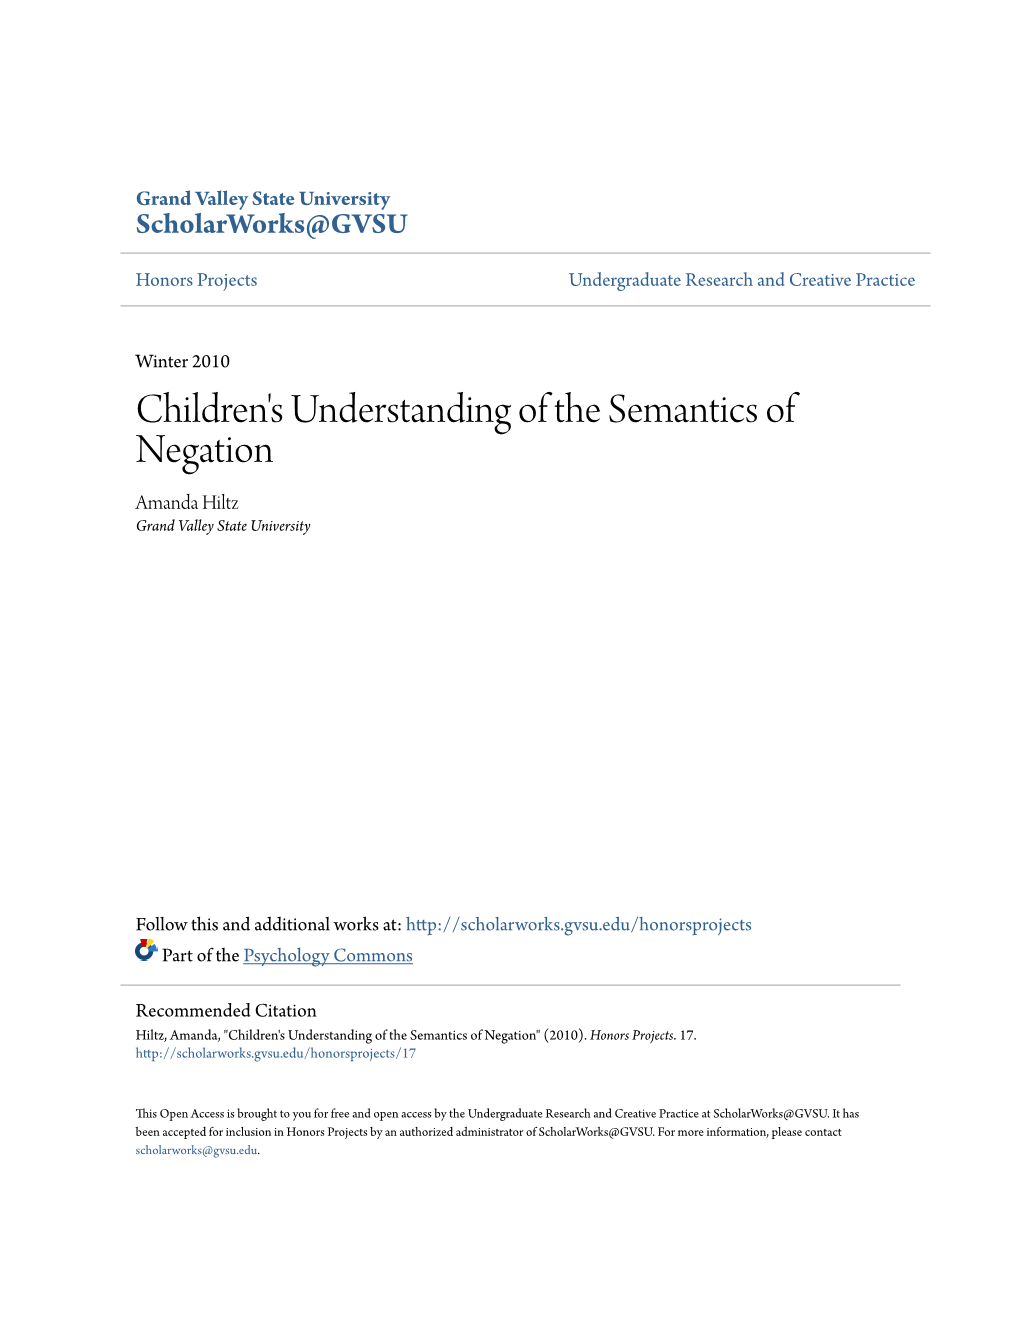 Children's Understanding of the Semantics of Negation Amanda Hiltz Grand Valley State University